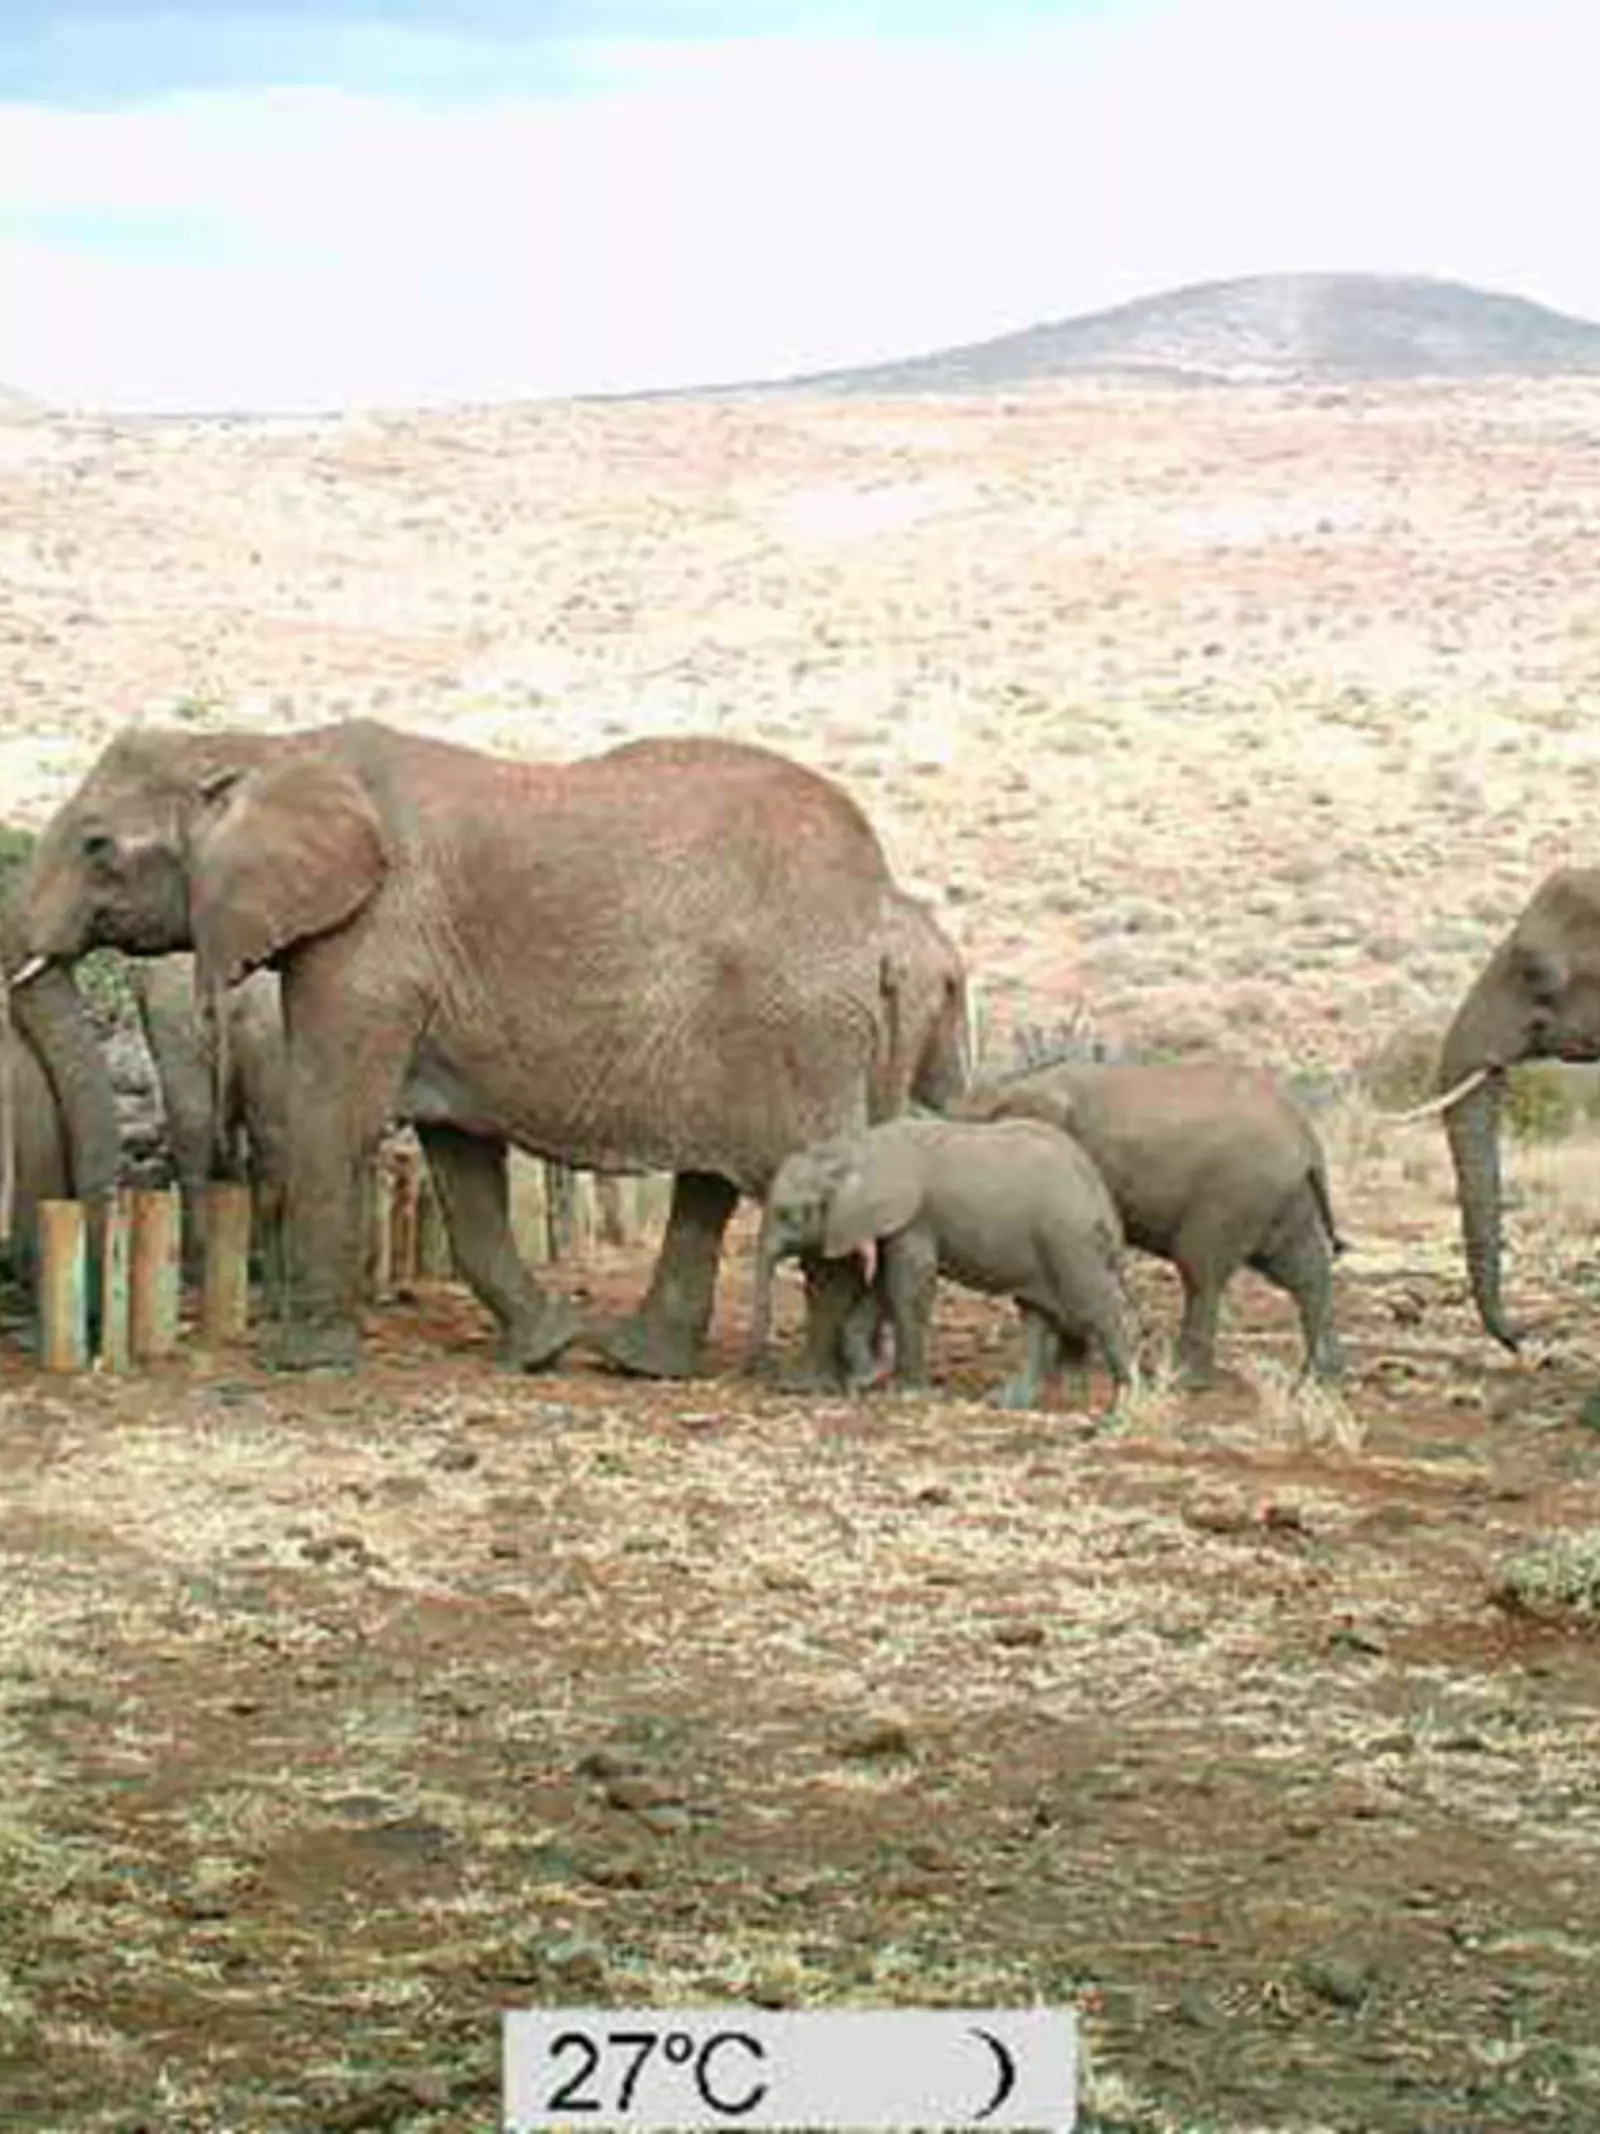 Elephant herd in camera trap